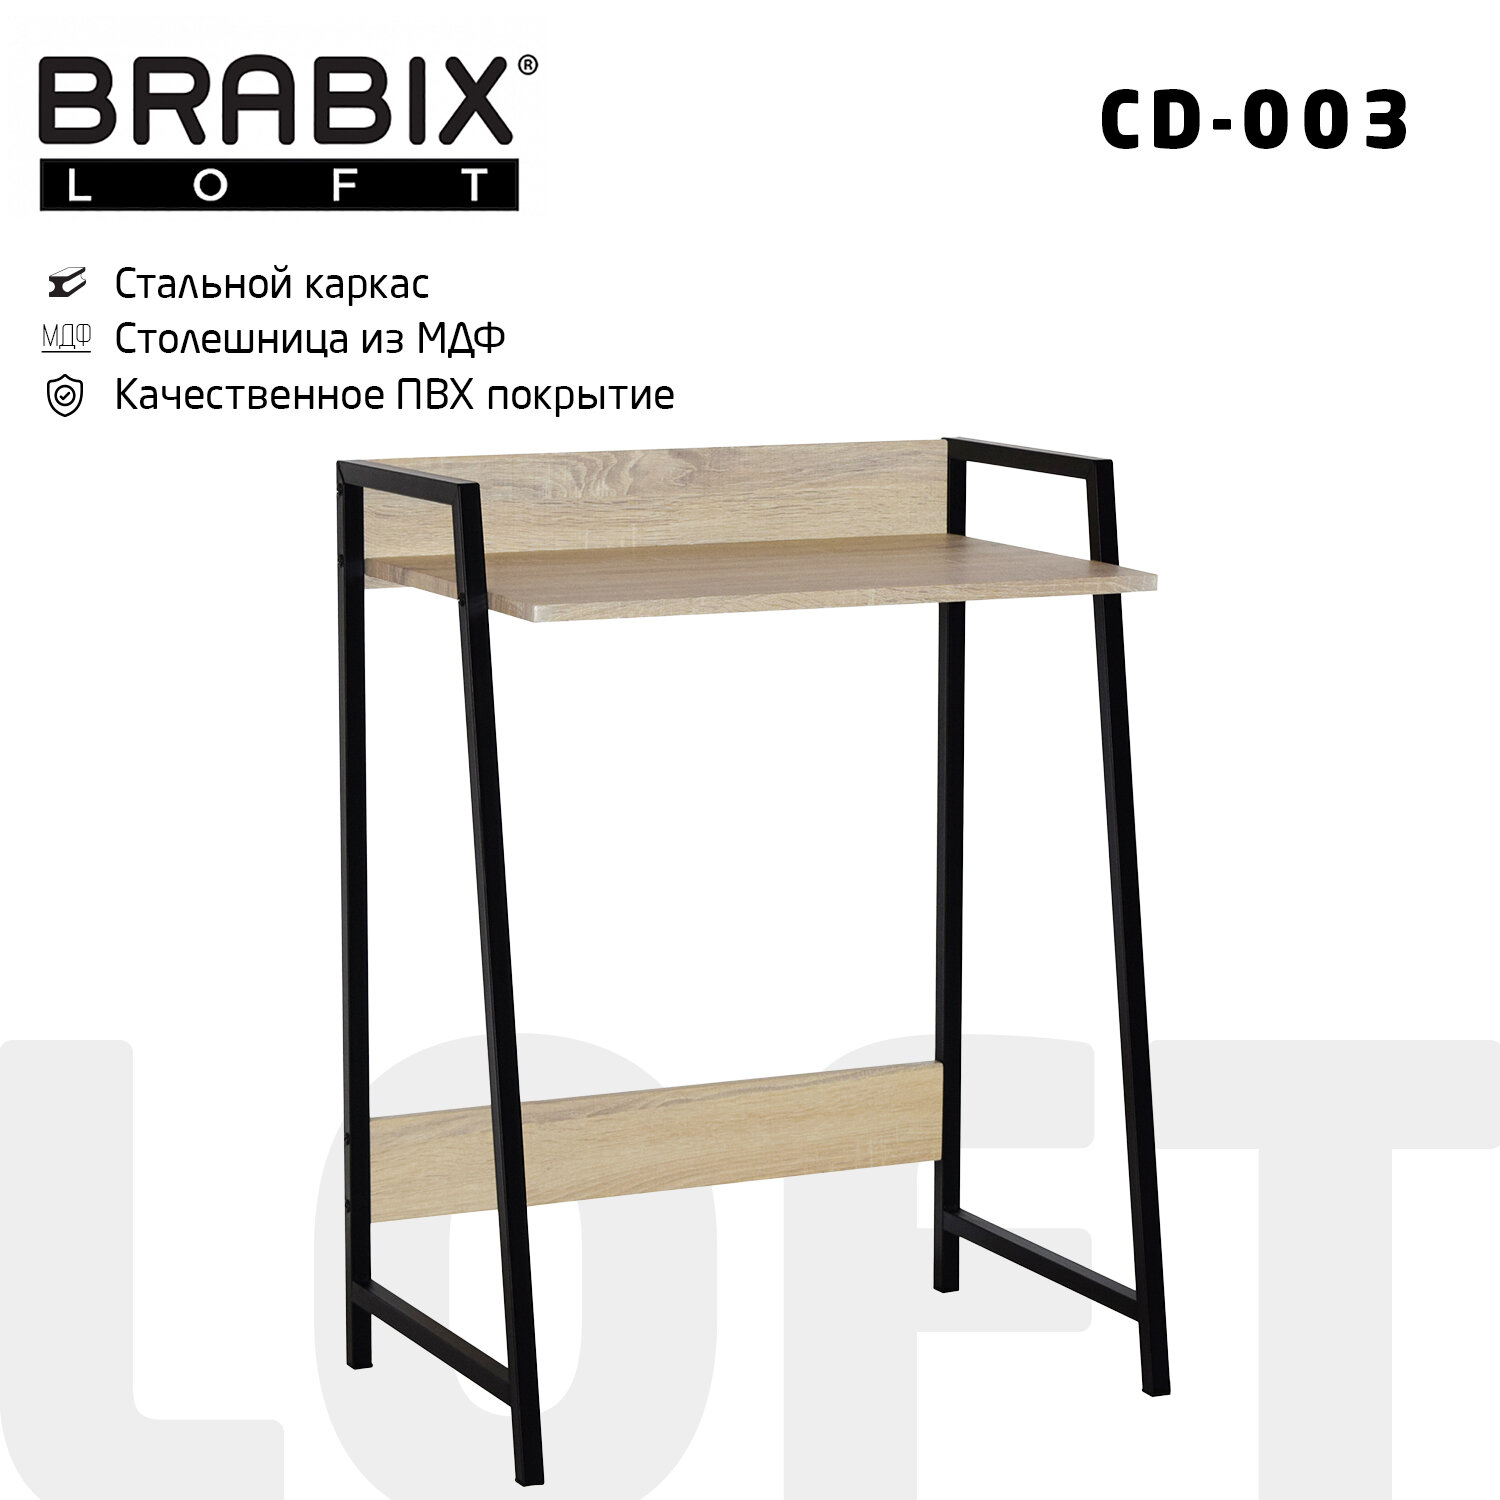 Стол на металлокаркасе Brabix Loft CD-003